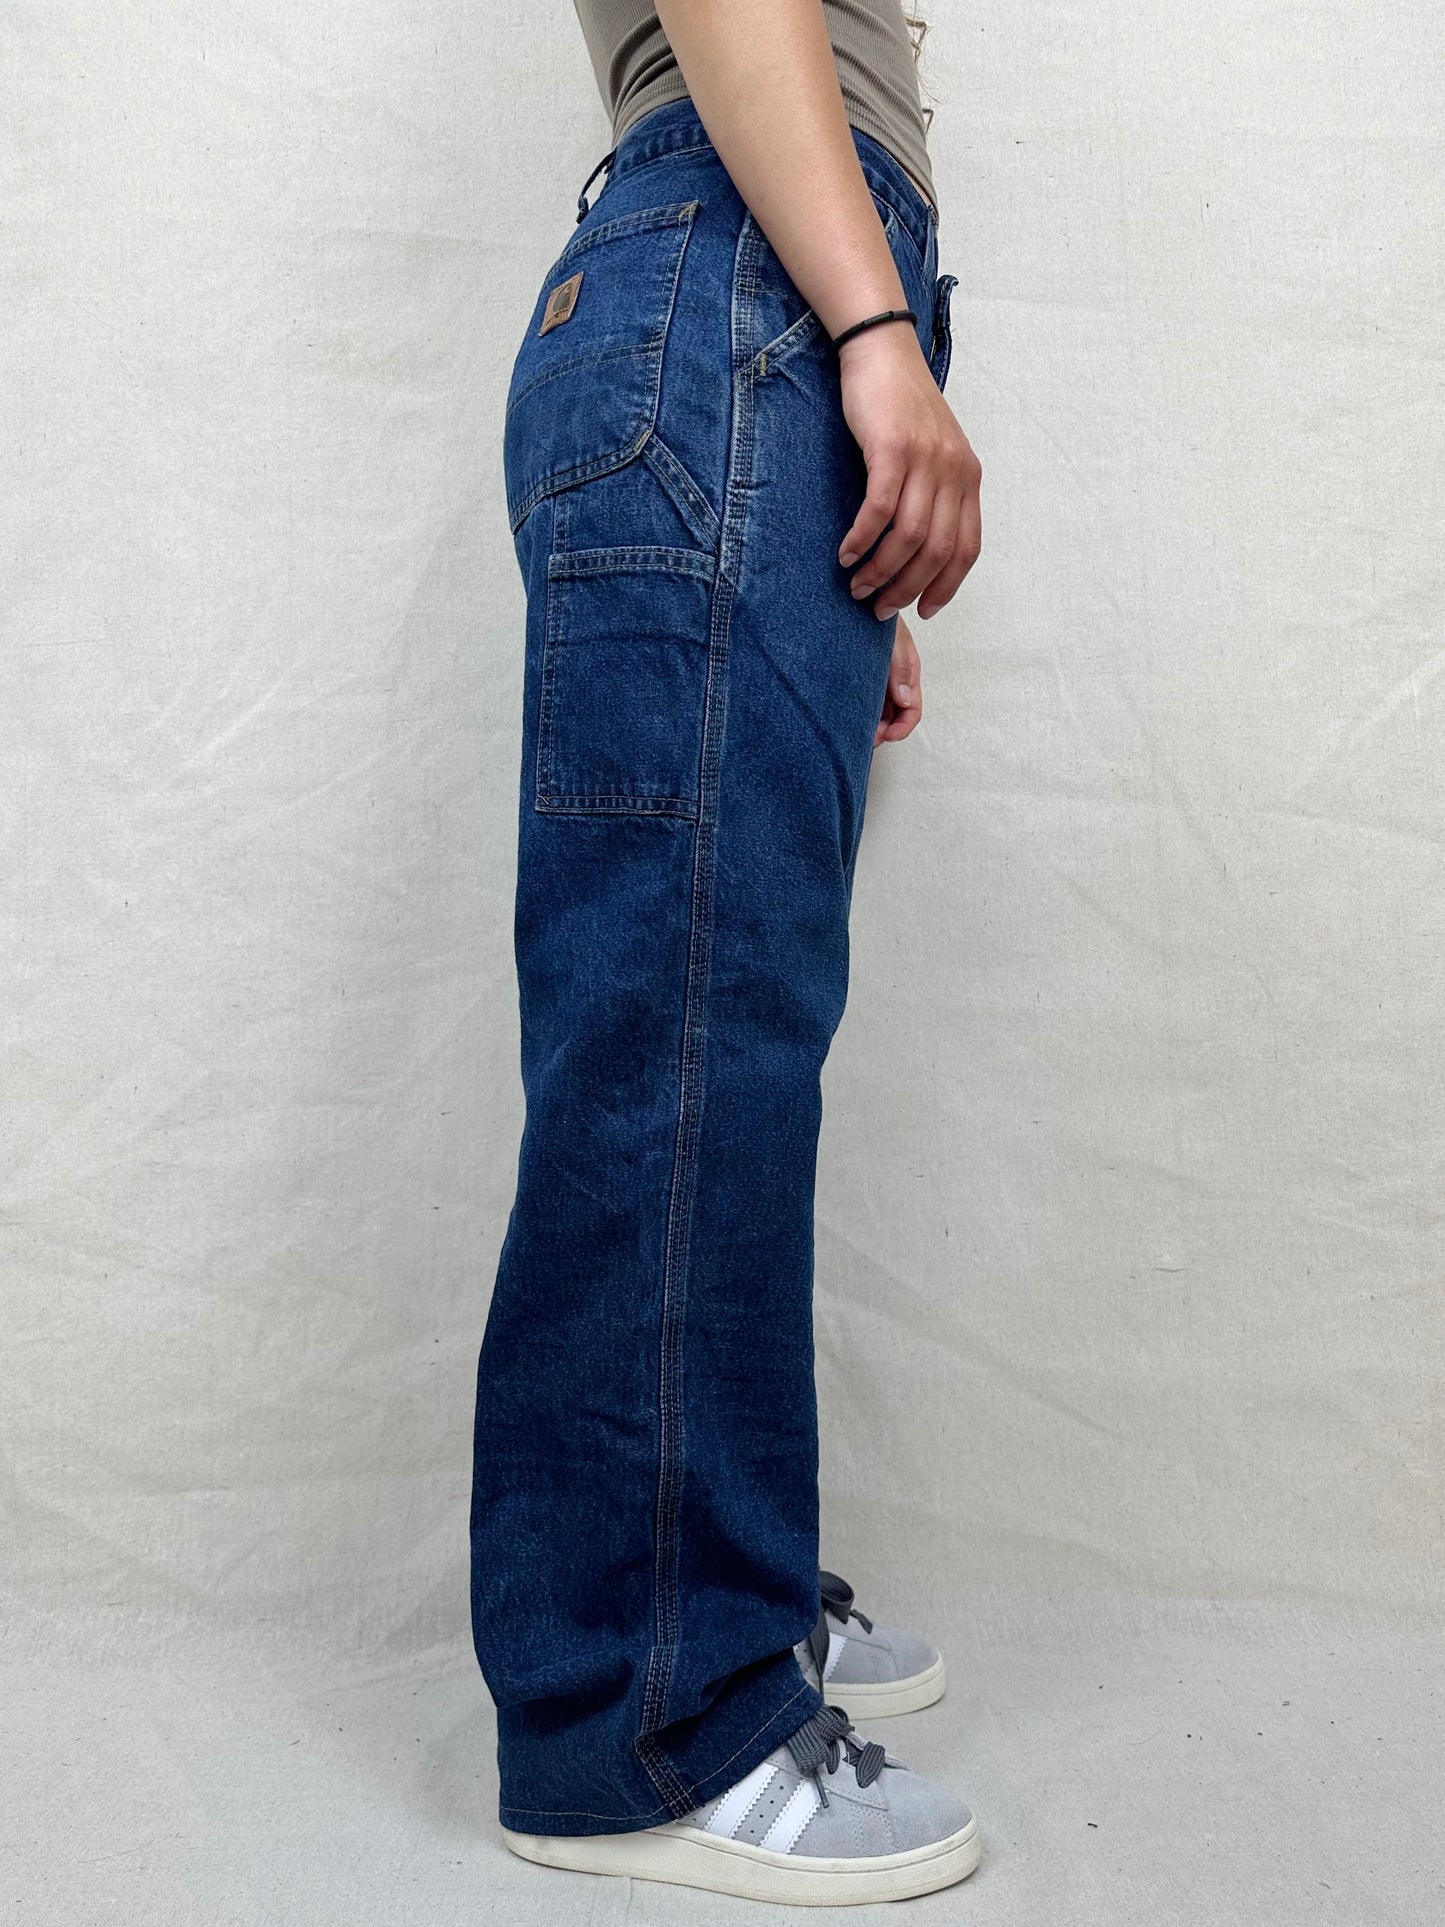 90's Carhartt Heavy Duty Vintage Carpenter Jeans Size 30x31